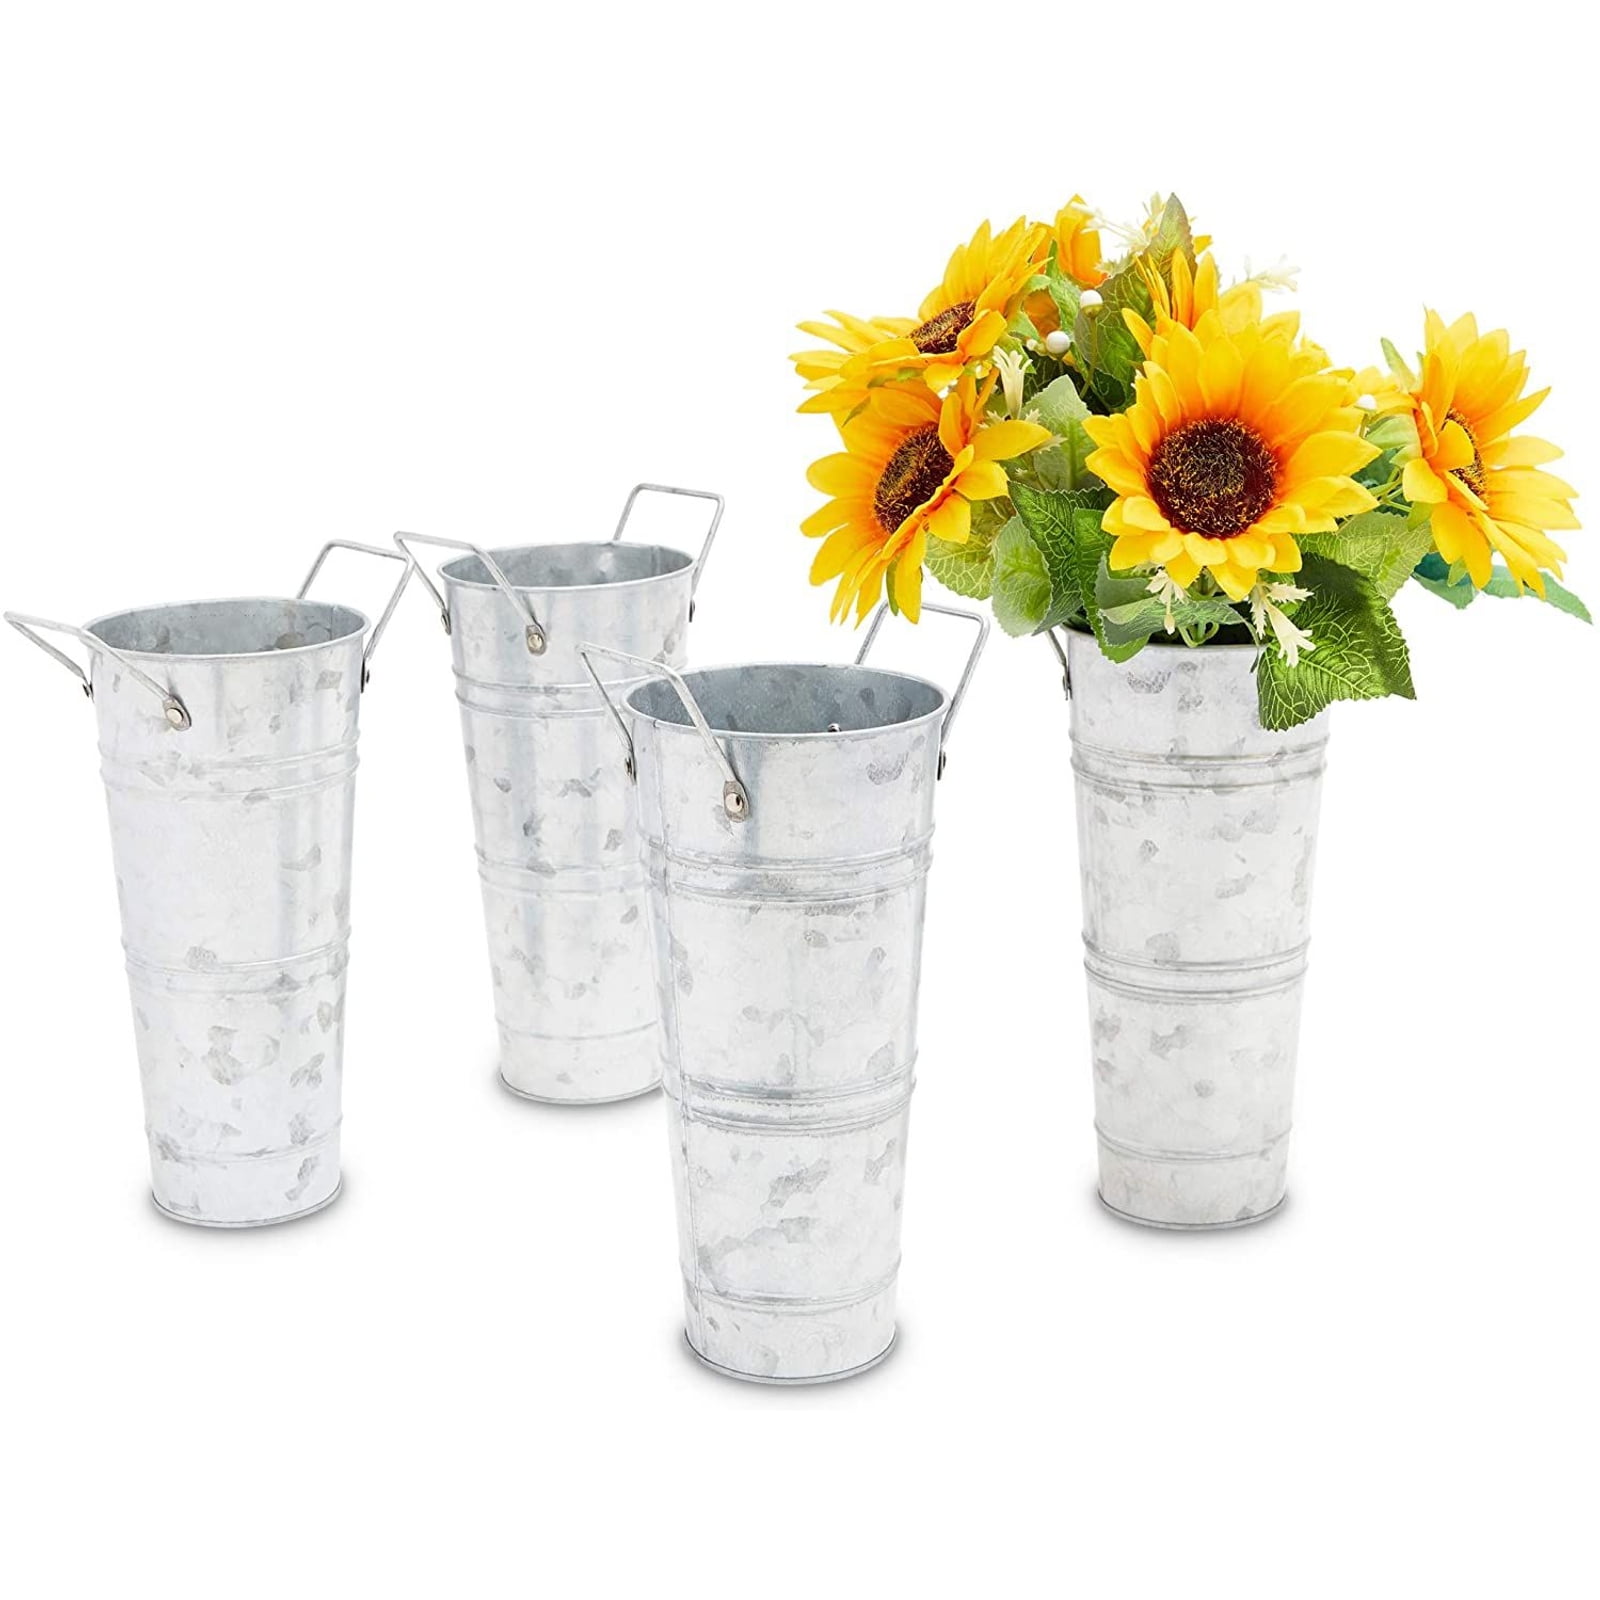 Yardwe Flowerpots Plant Pots 2Pcs Vintage Metal Flower Vase Iron Flower Pot Rustic Style Flower Bucket